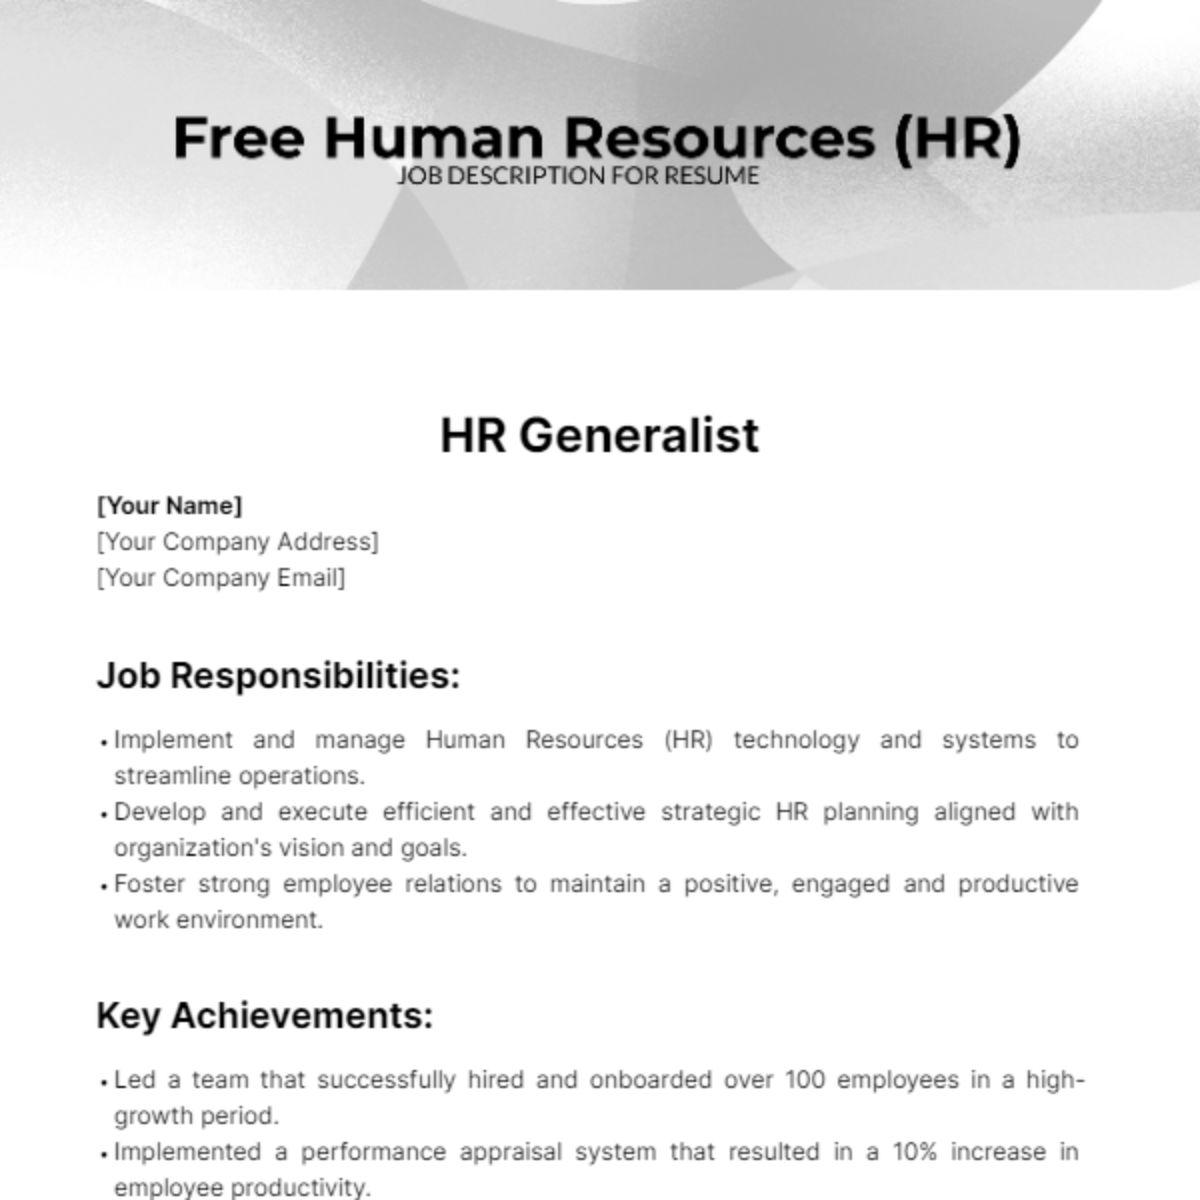 Human Resources (HR) Job Description for Resume Template